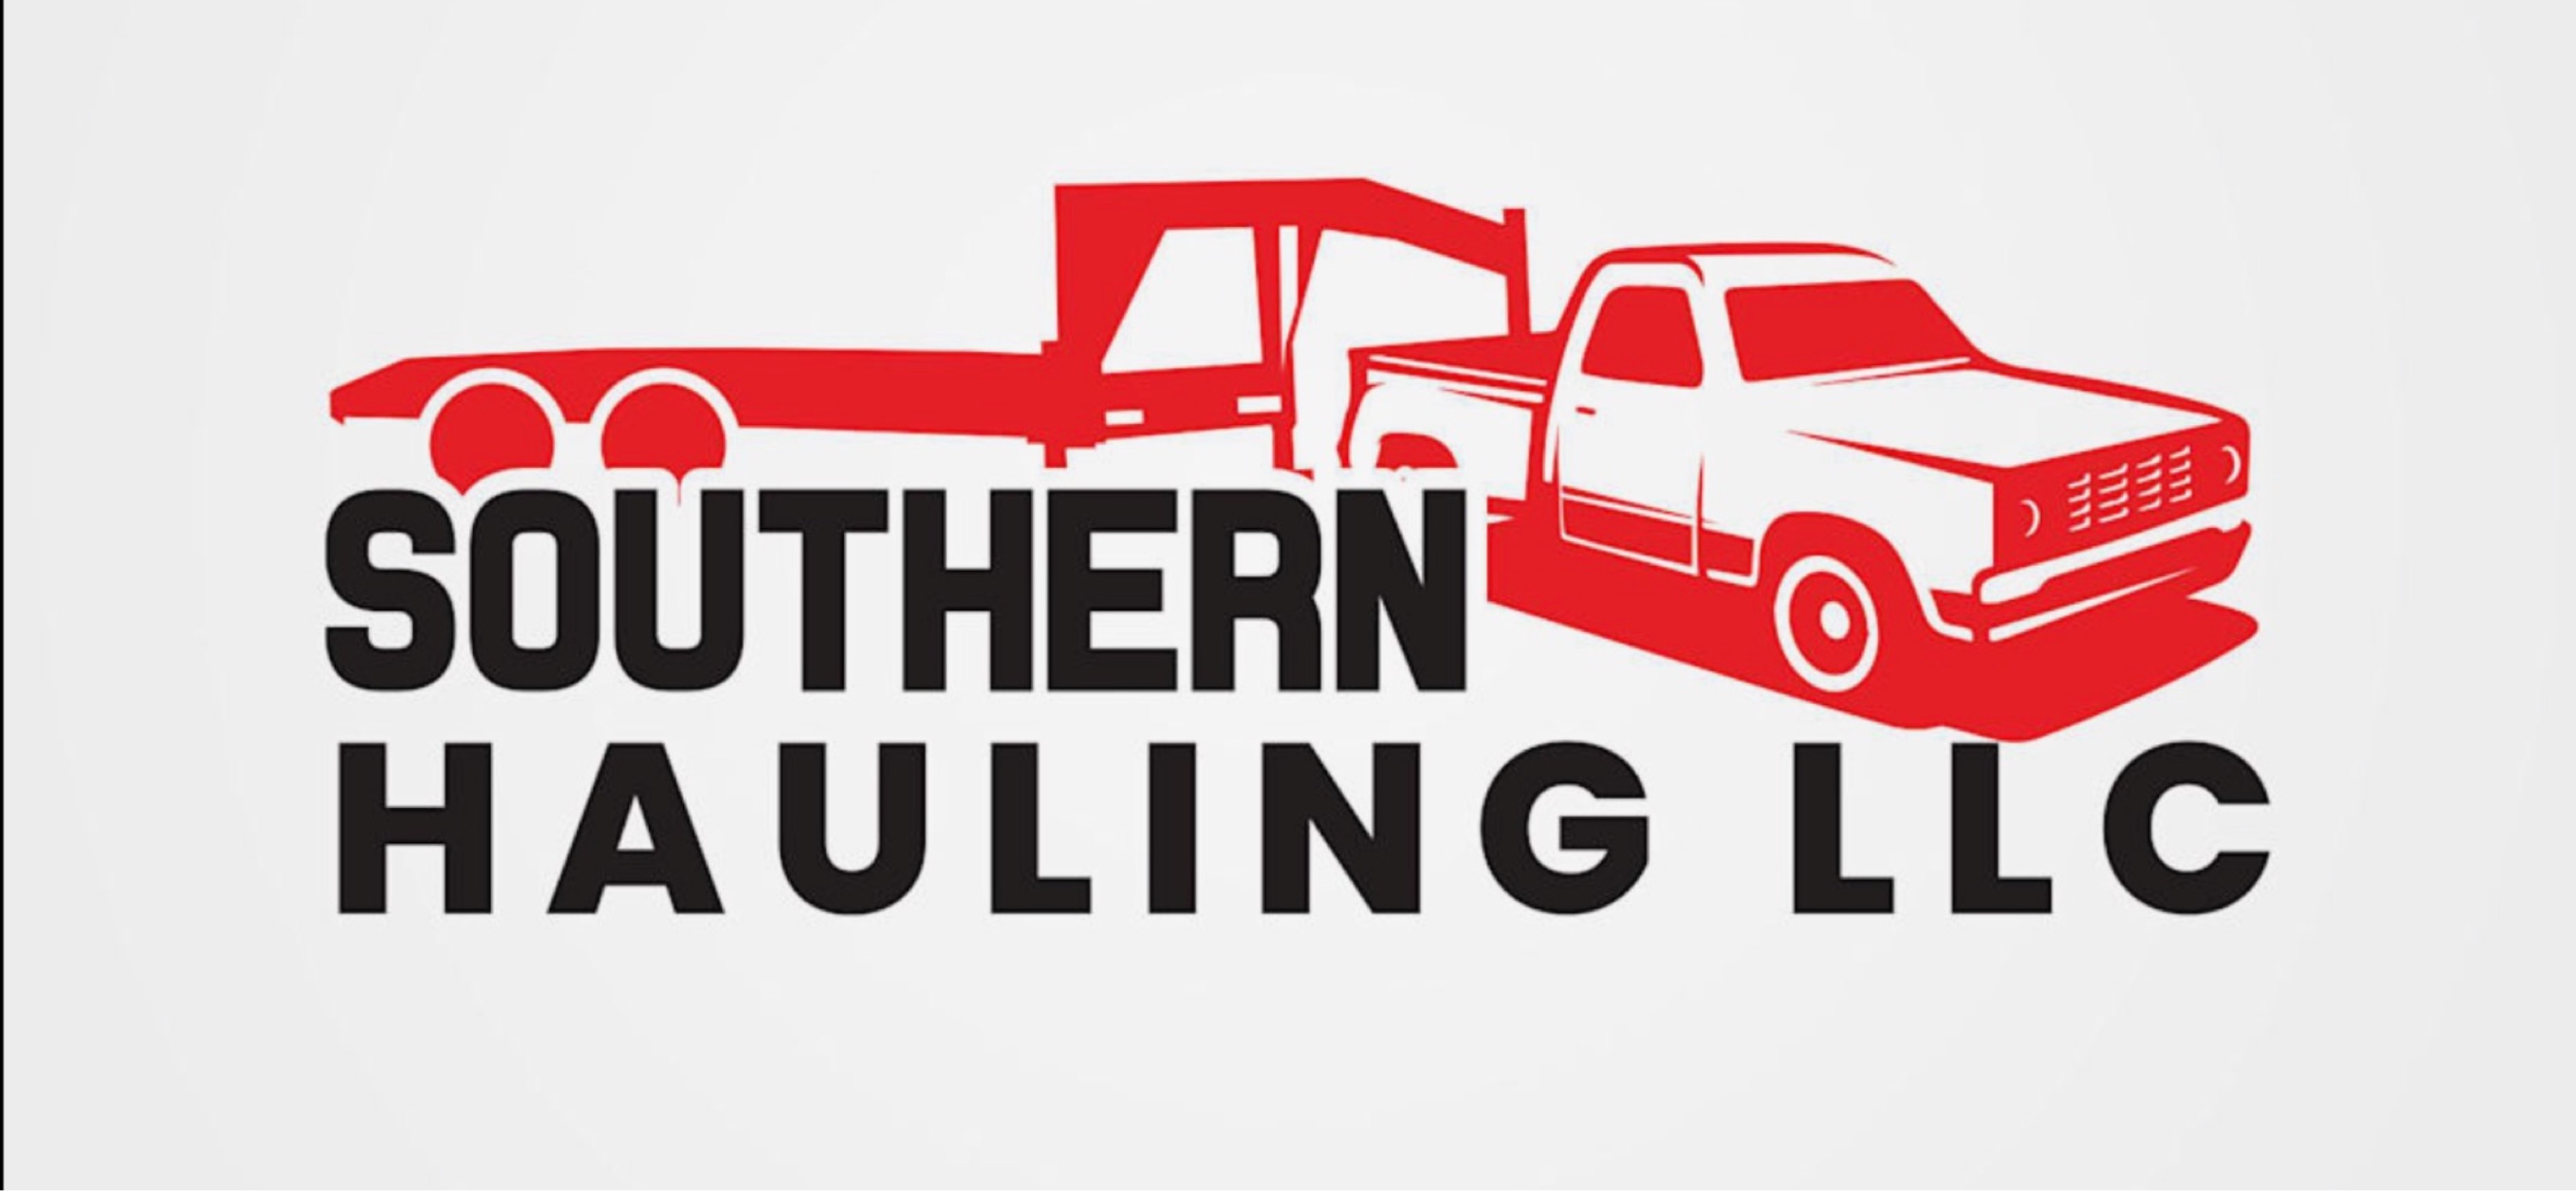 SOUTHERN HAULING LLC Logo